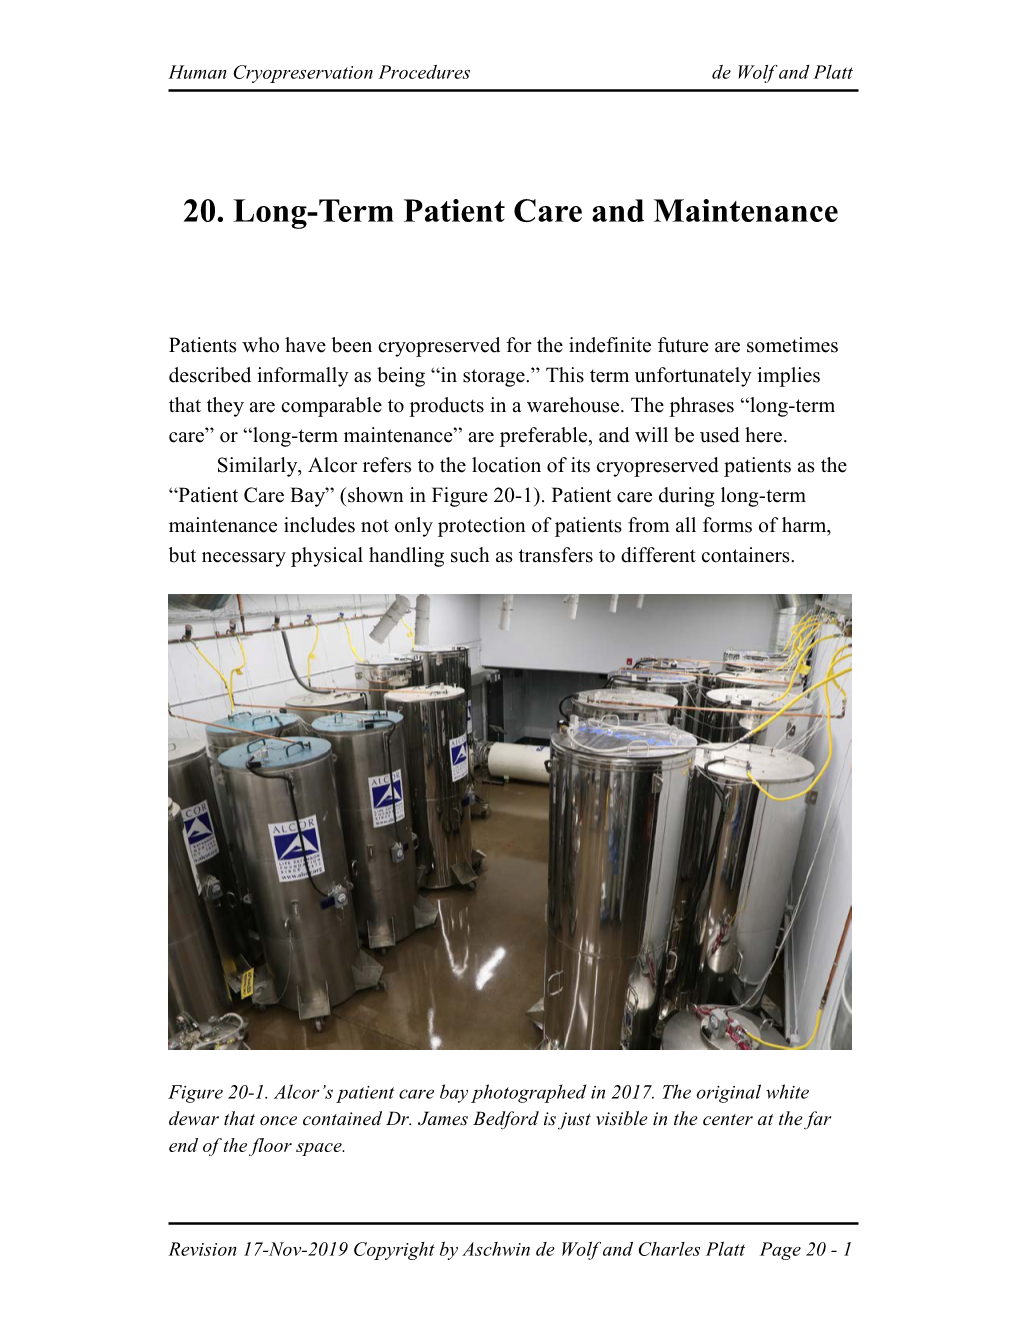 20. Long-Term Patient Care and Maintenance